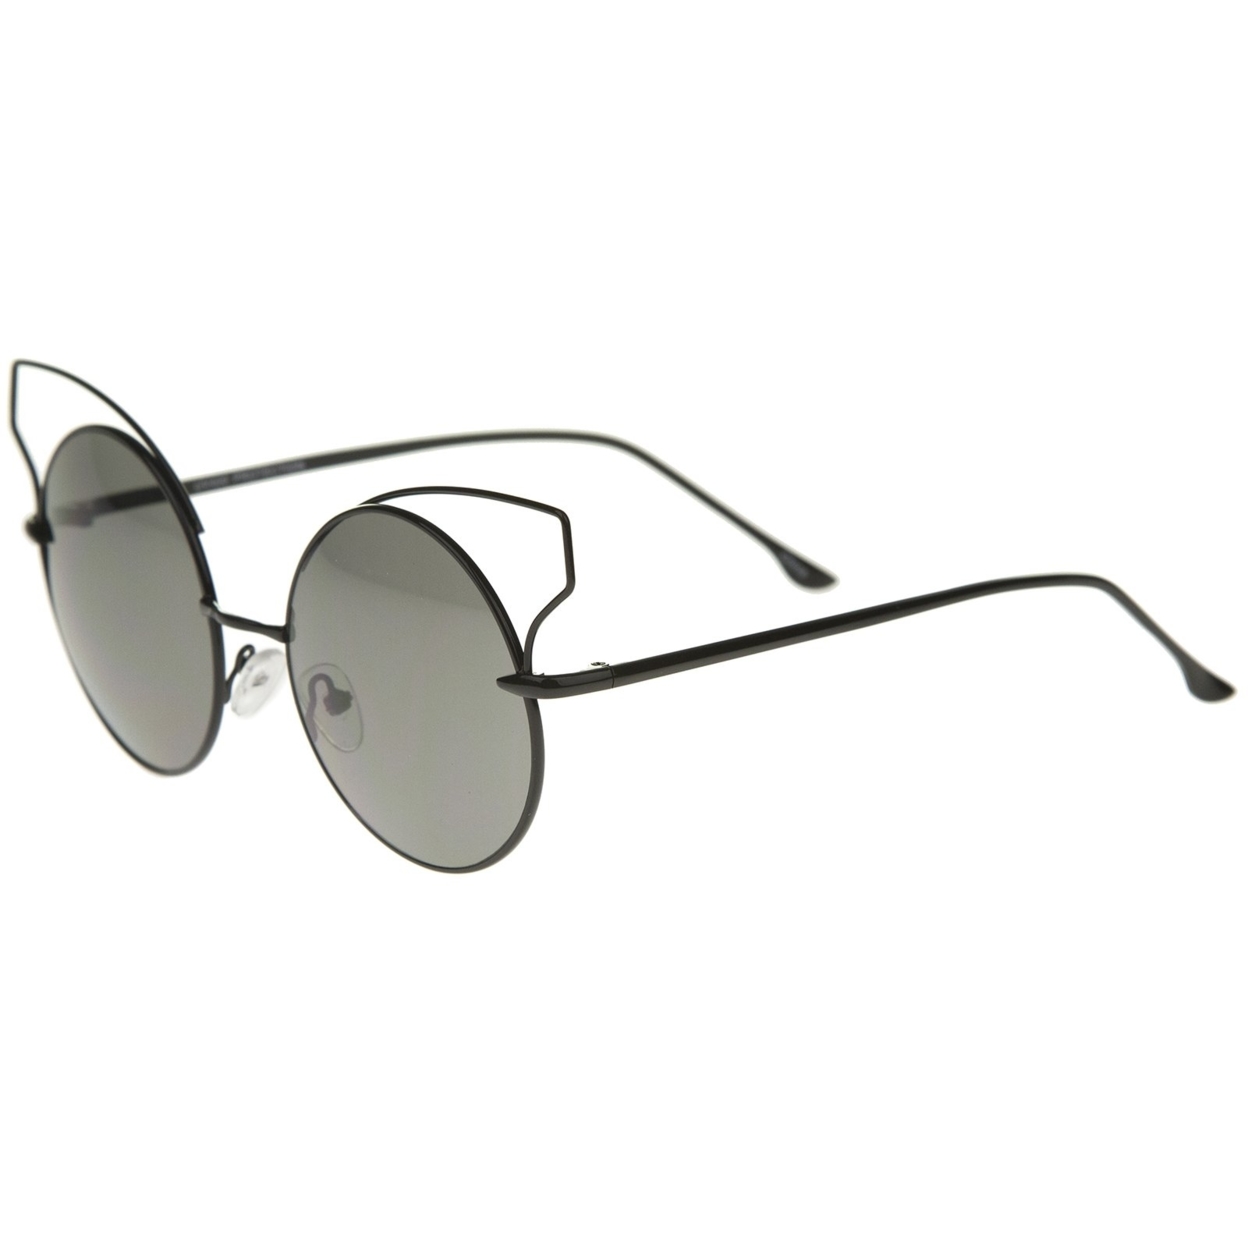 Women's Full Metal Open Design Frame Round Cat Eye Sunglasses 55mm - Silver / Smoke